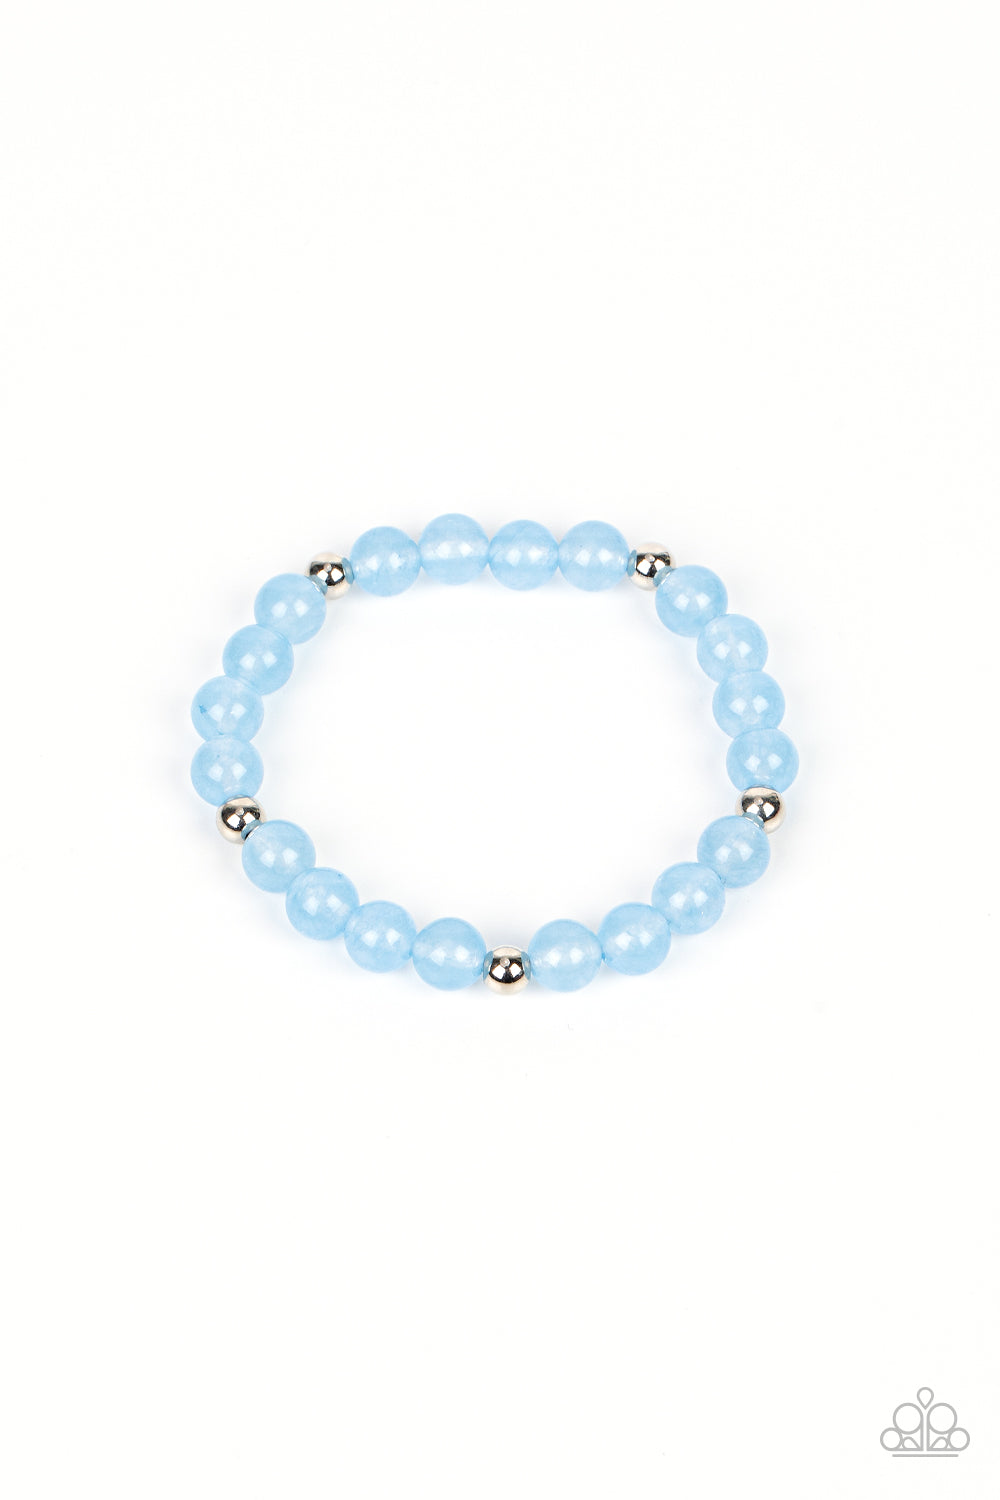 blue, moonstone, bracelet, silver, mens, mens bracelet, stretchy bracelet